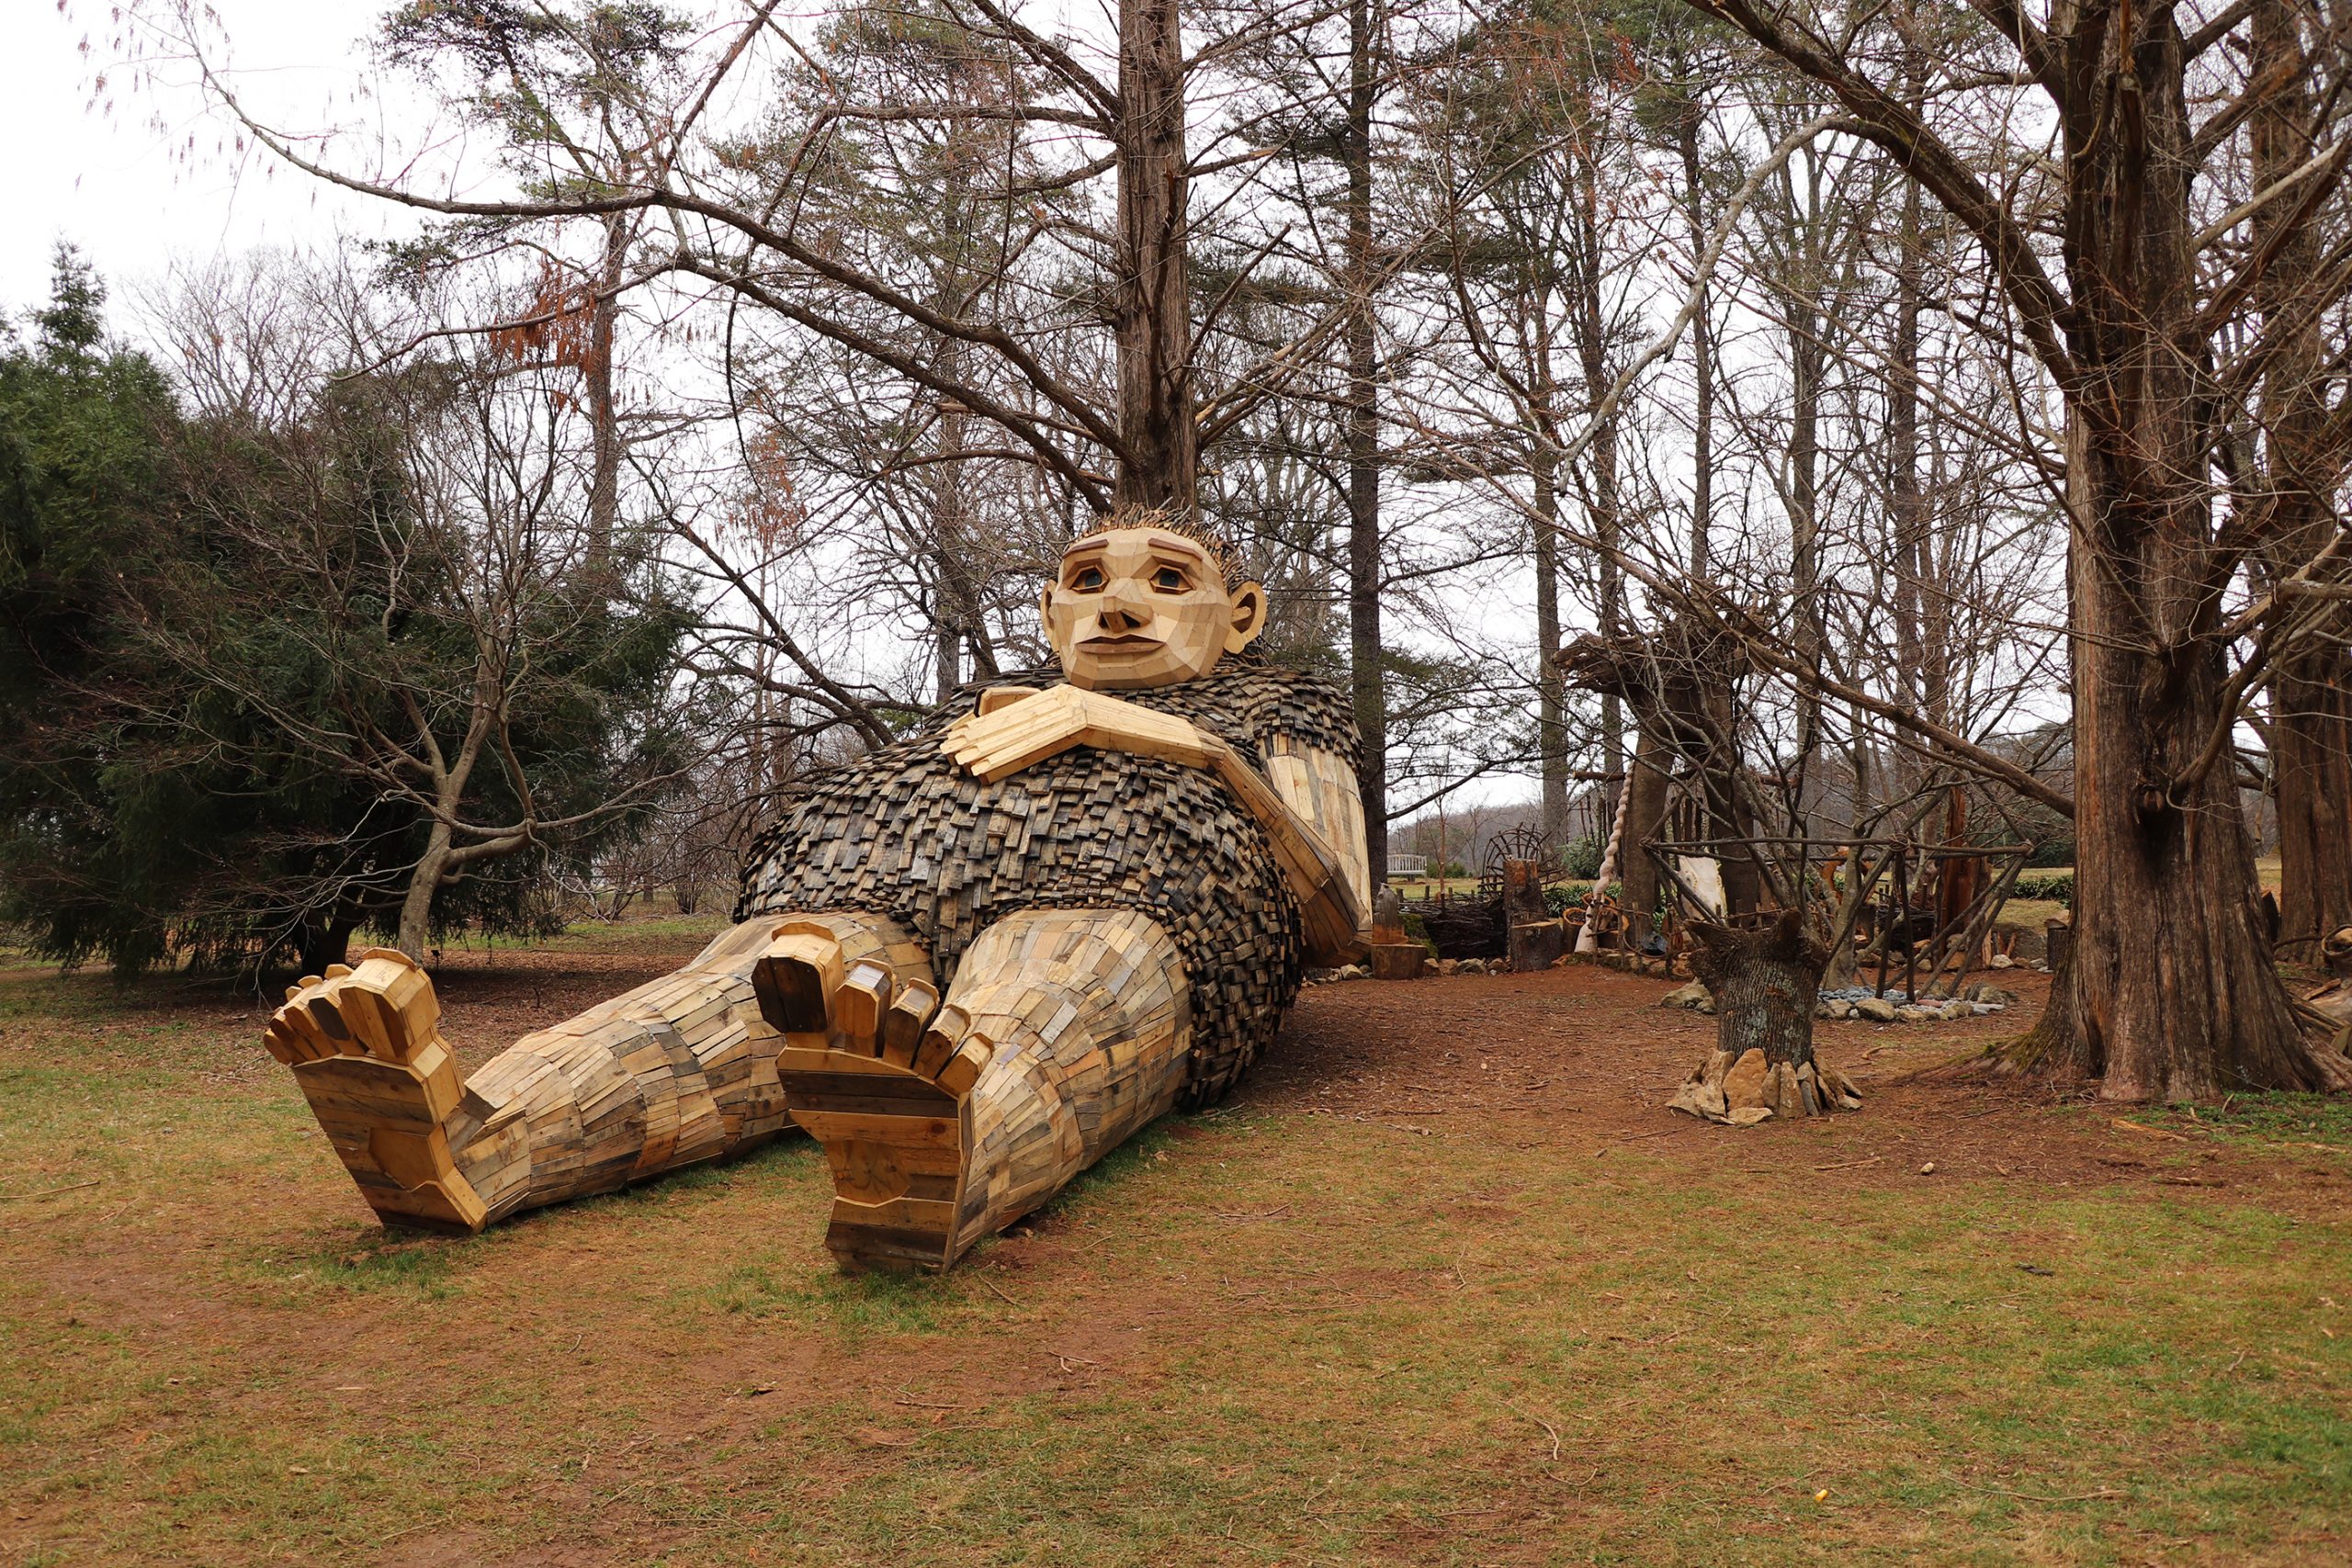 Bernheim Arboretum offers artist residency. Deadline: January 18